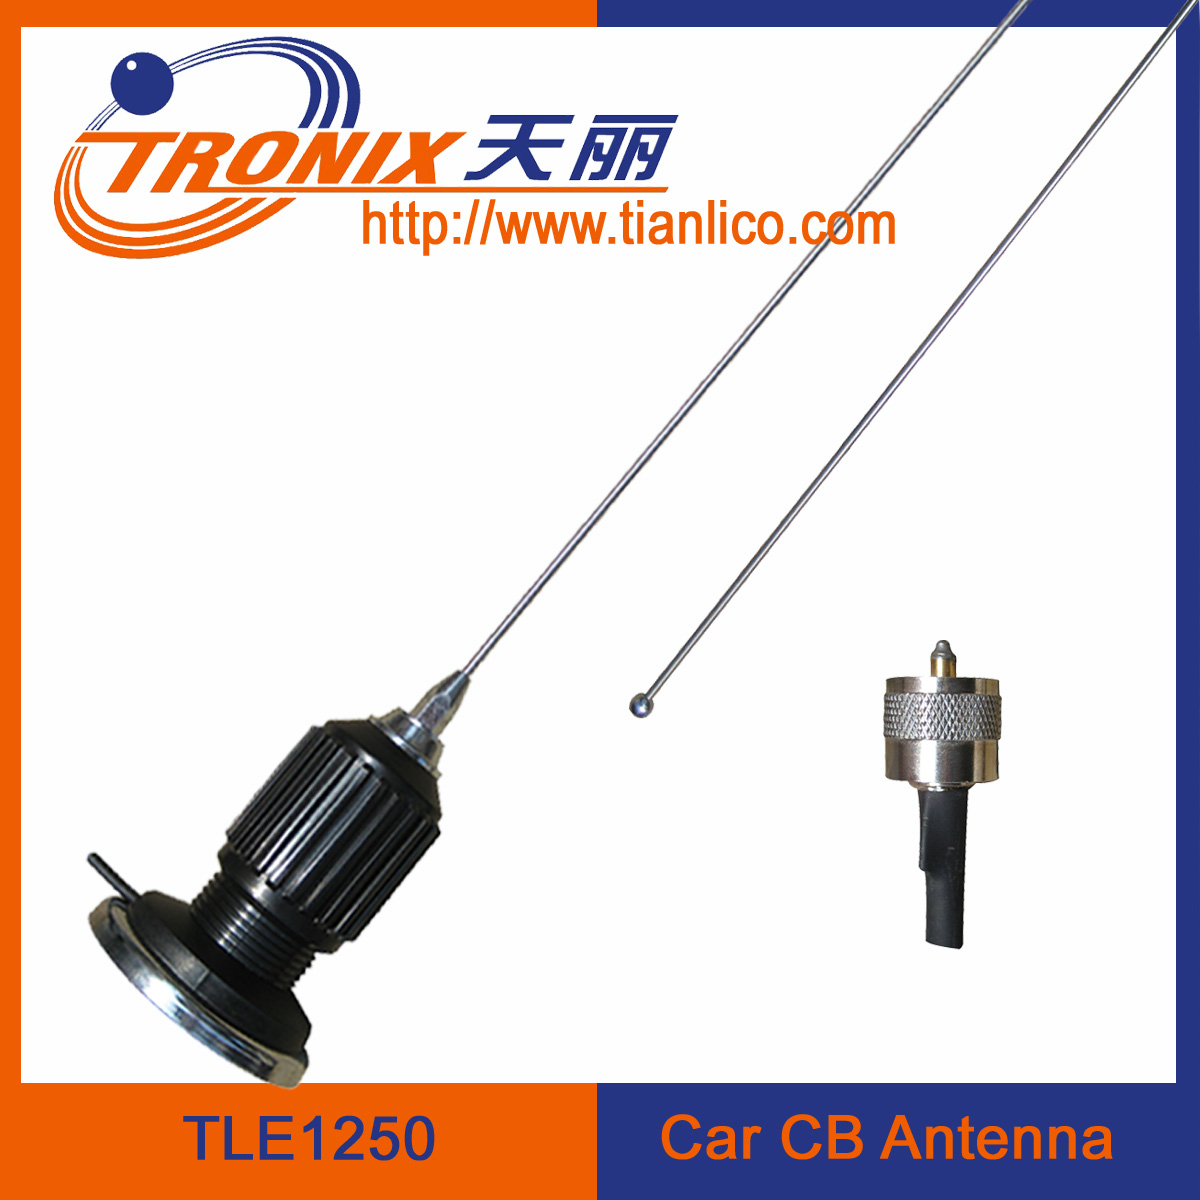 Cheap 27mhz radio cb antenna/ magnetic mount cb car antenna/ car cb antenna TLE1250 for sale